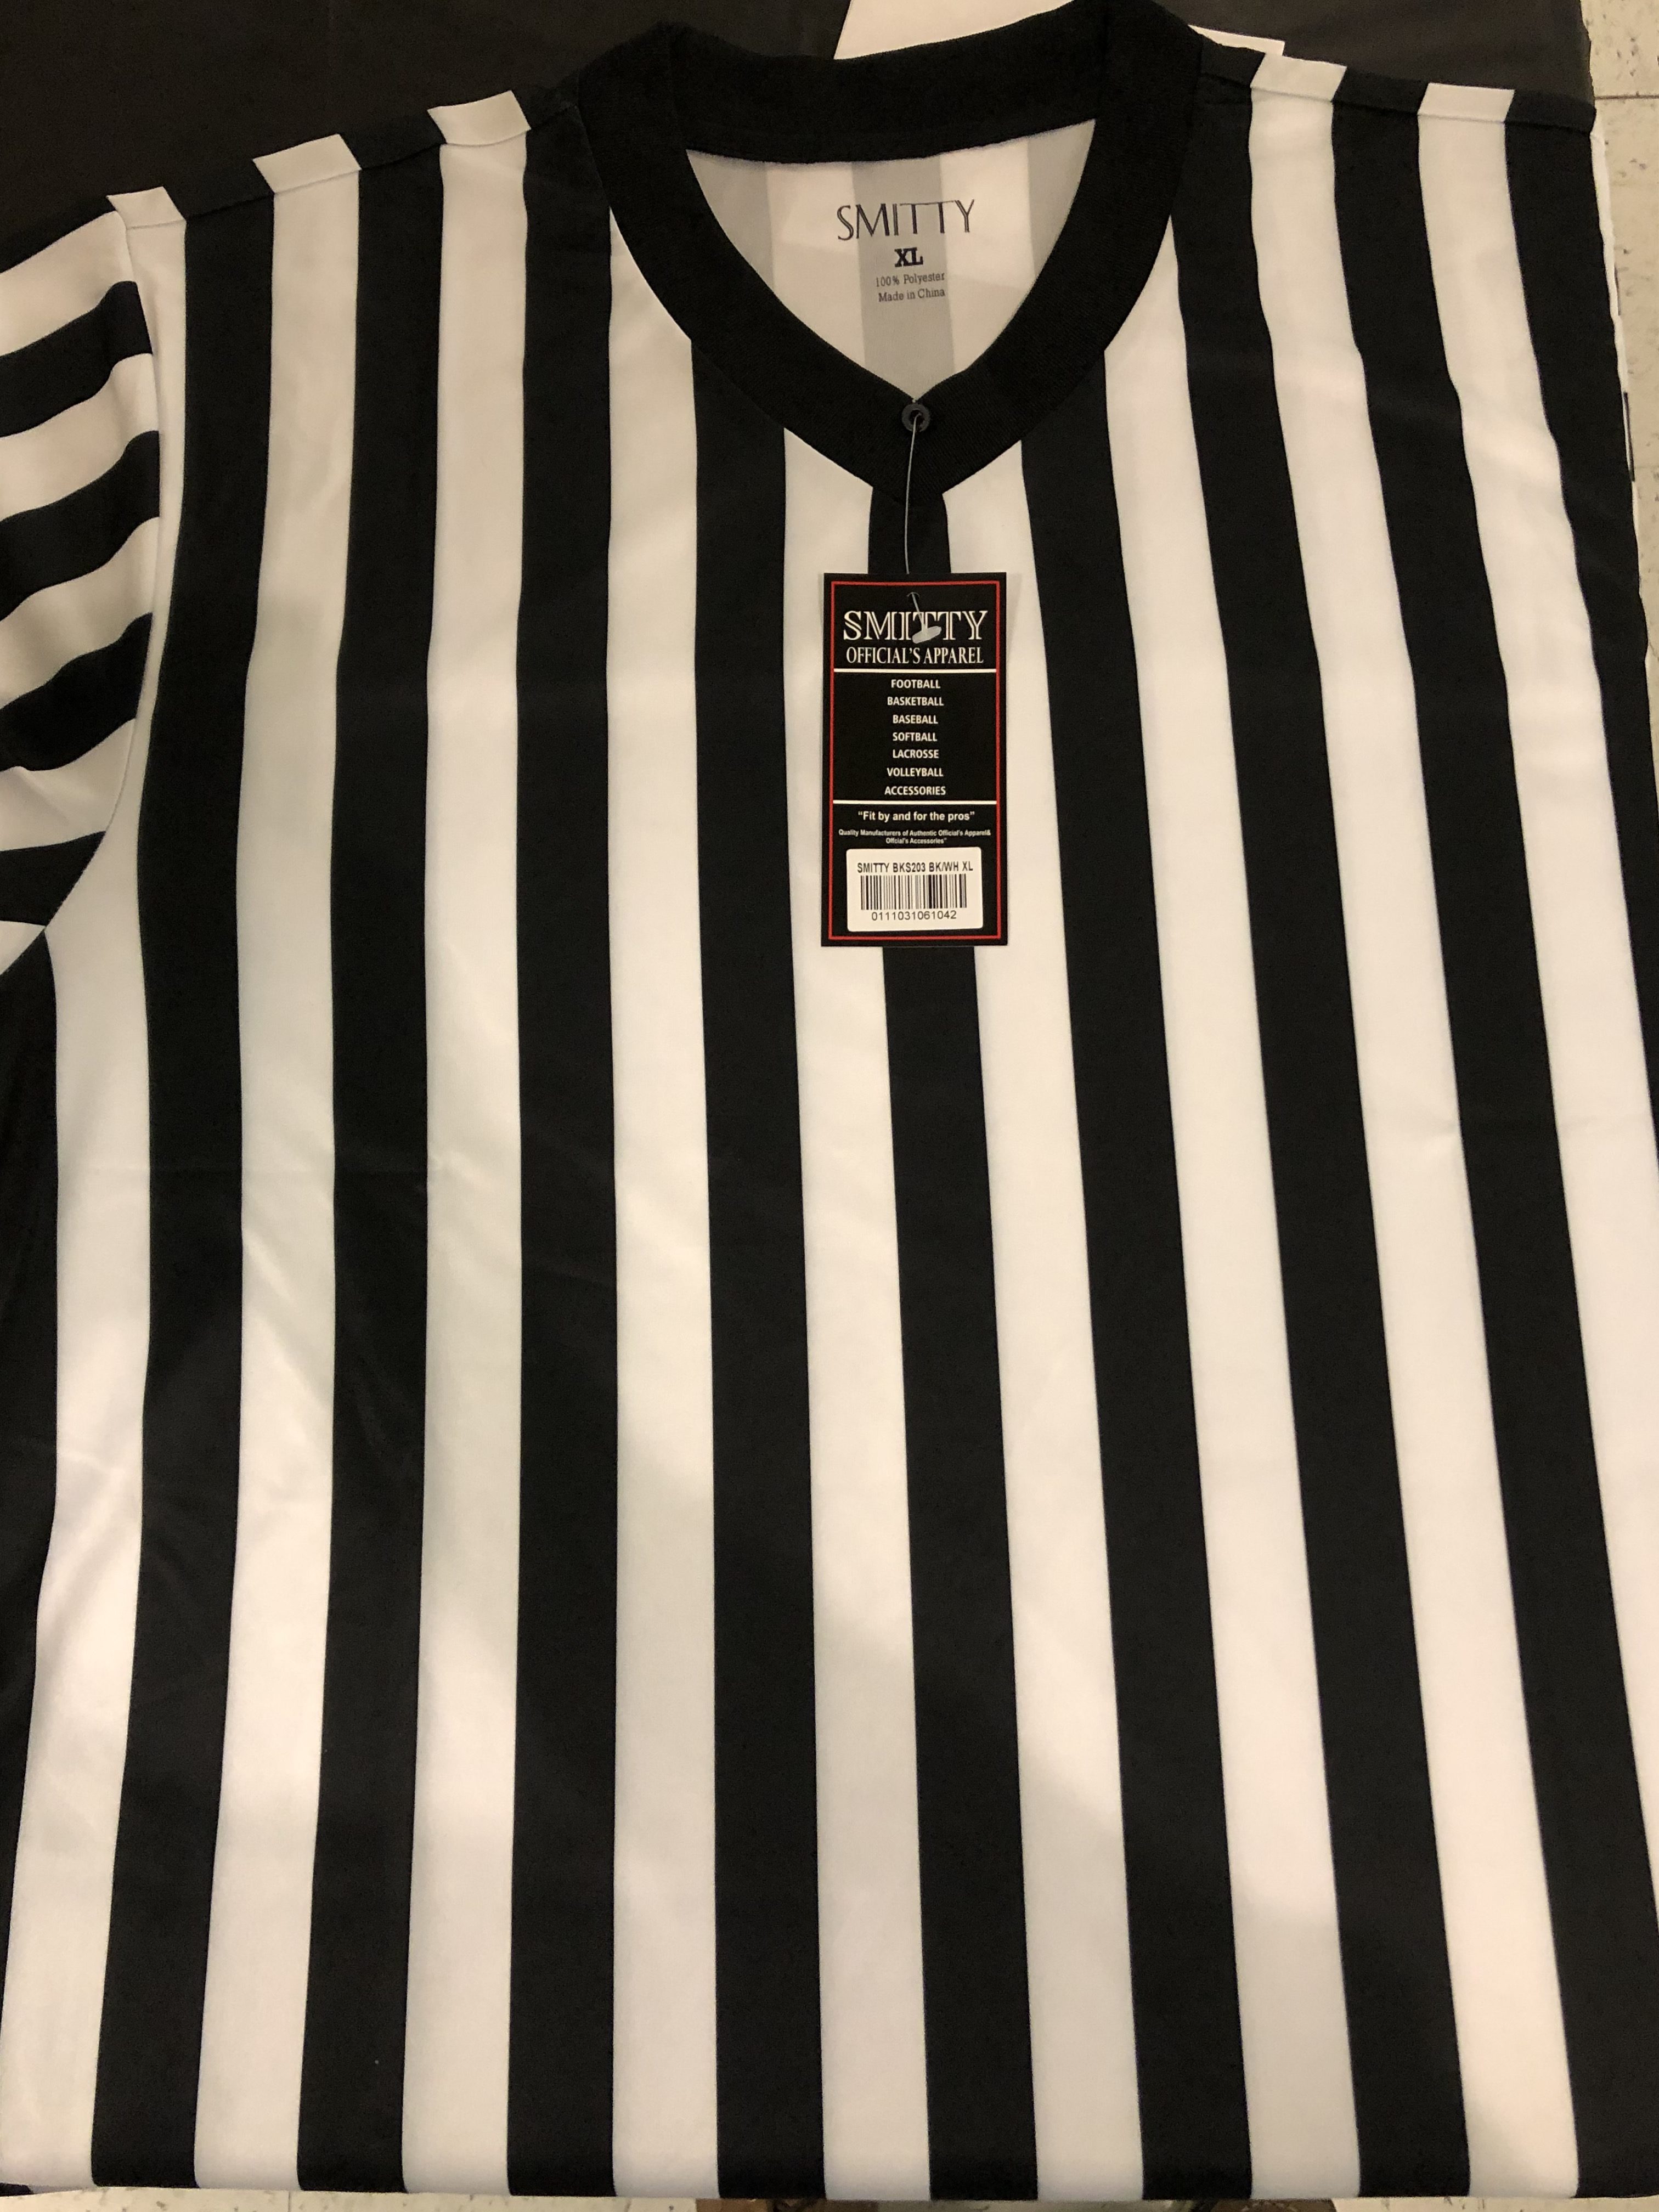 Made in The USA Smitty USA200-607 Mens Basketball V-Neck Body Flex Referee Shirt with USA Flag 